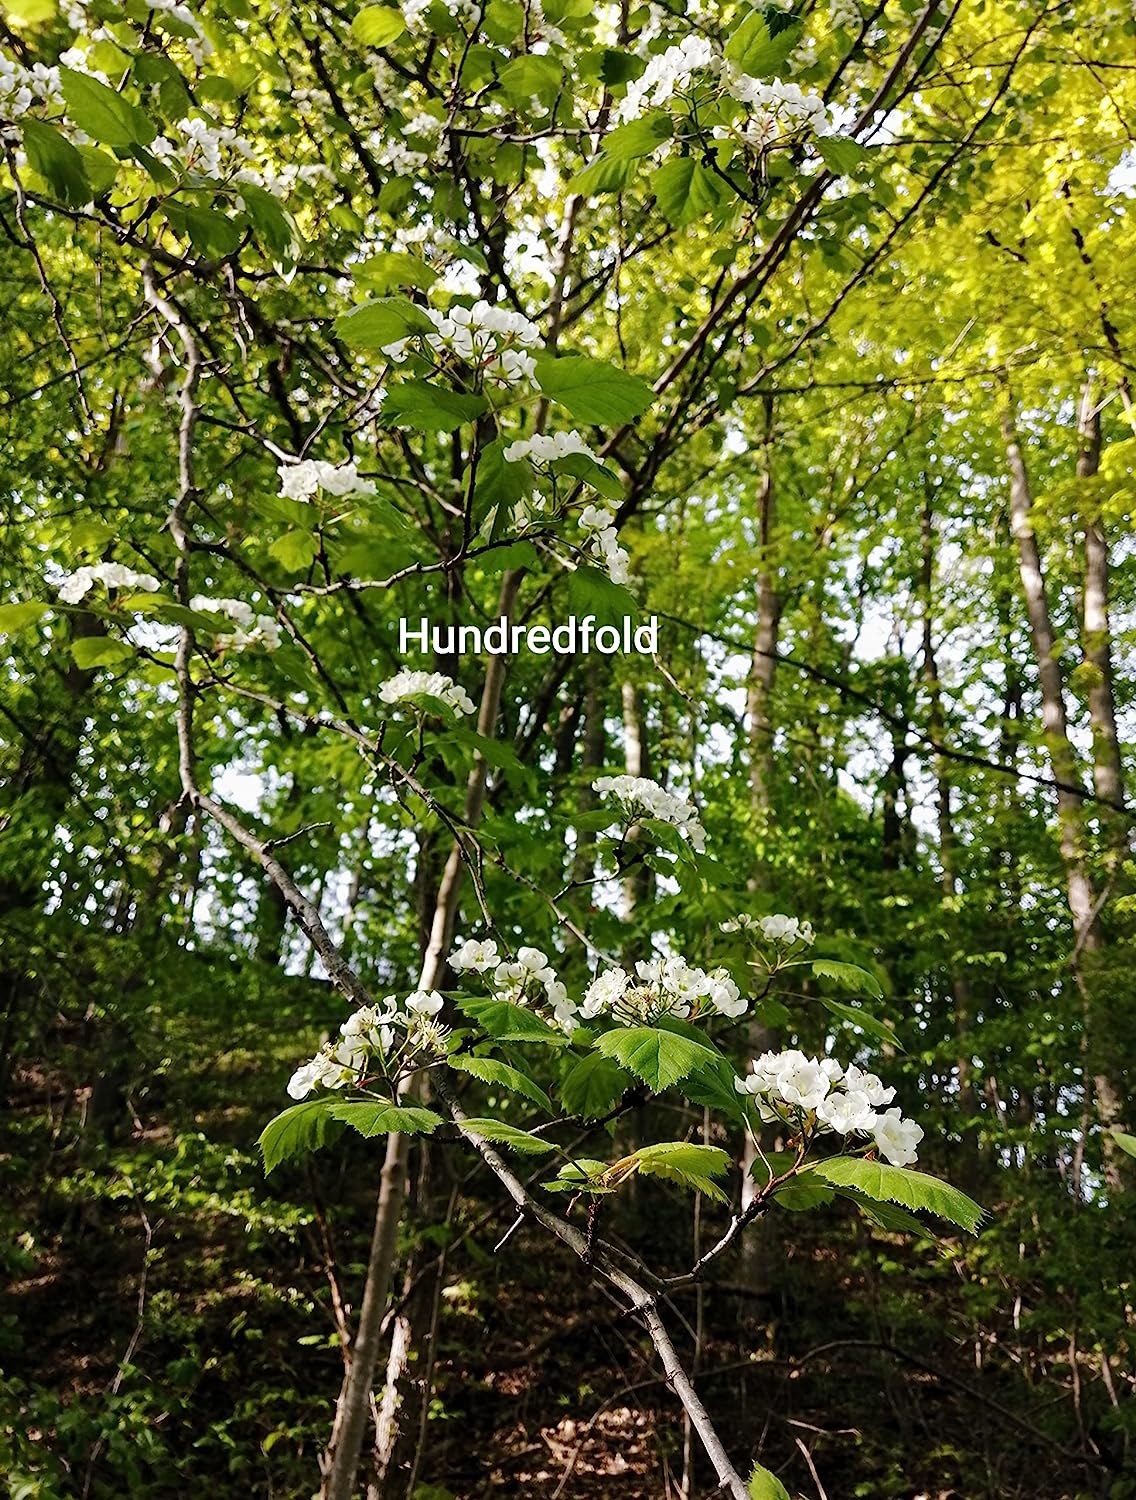 Hundredfold Downy Hawthorn 20 Seeds – Crataegus mollis Red Haw Thorn Canada Native Small Fruit Tree, Perfect for Backyard Birding & Hedgerow Hedge Row